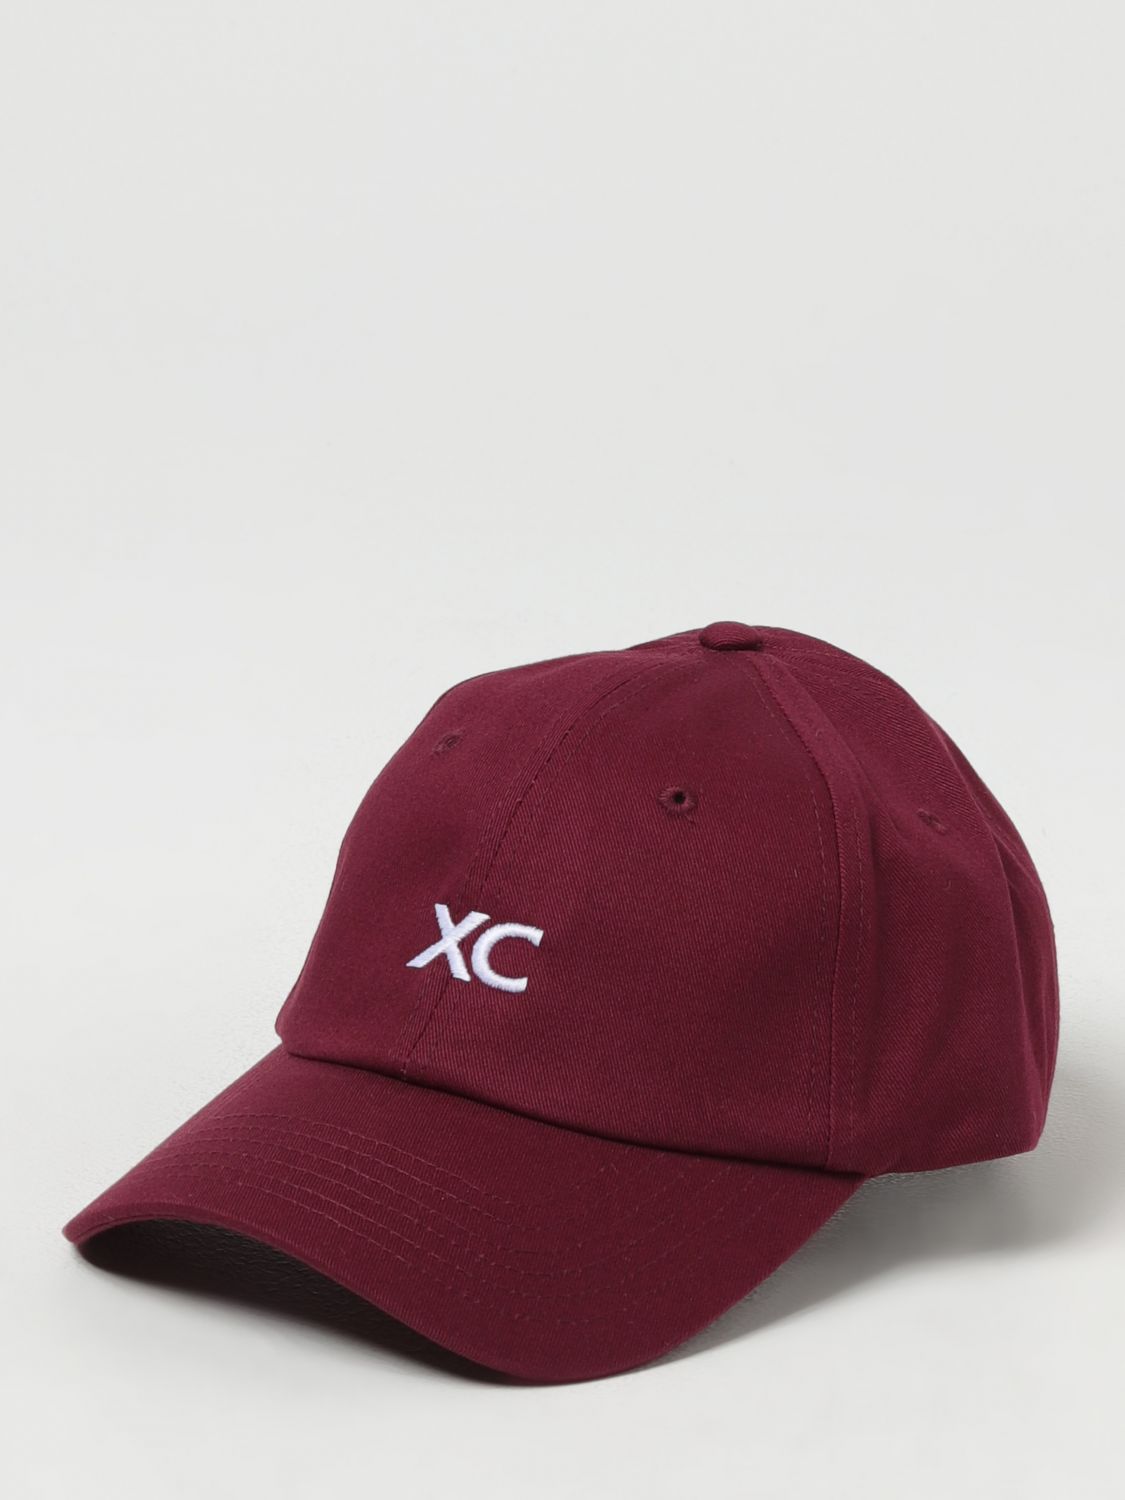 Xc Hat XC Men color Burgundy